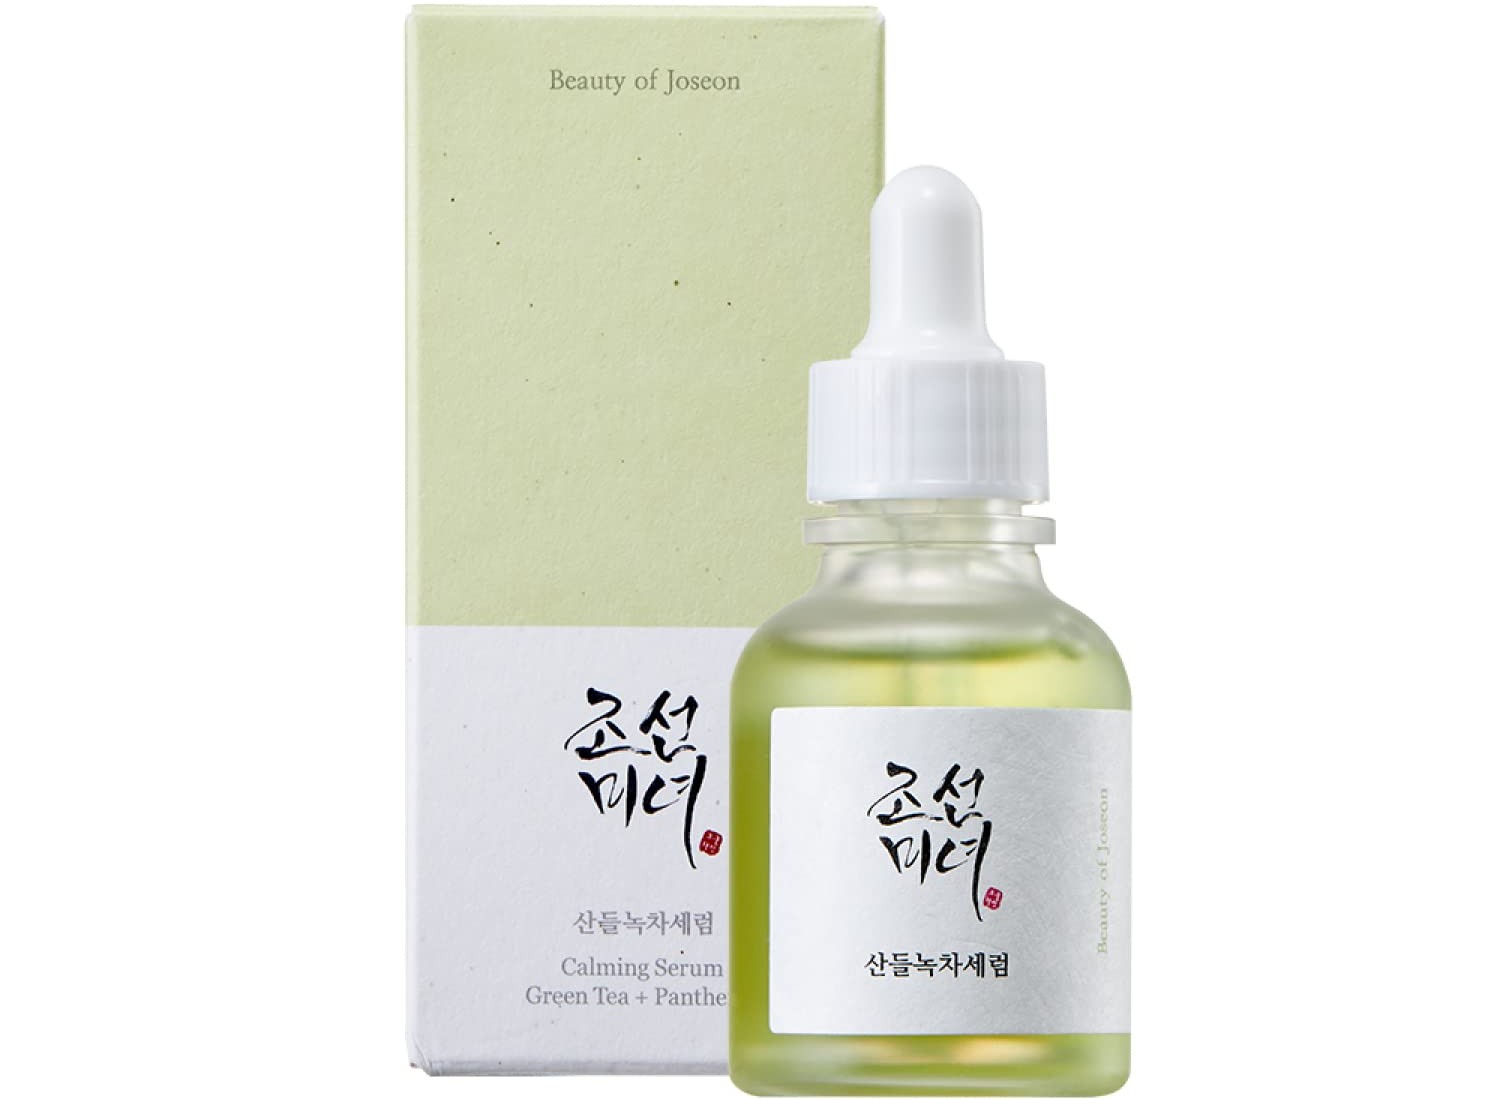 Beauty of Joseon Calming Serum